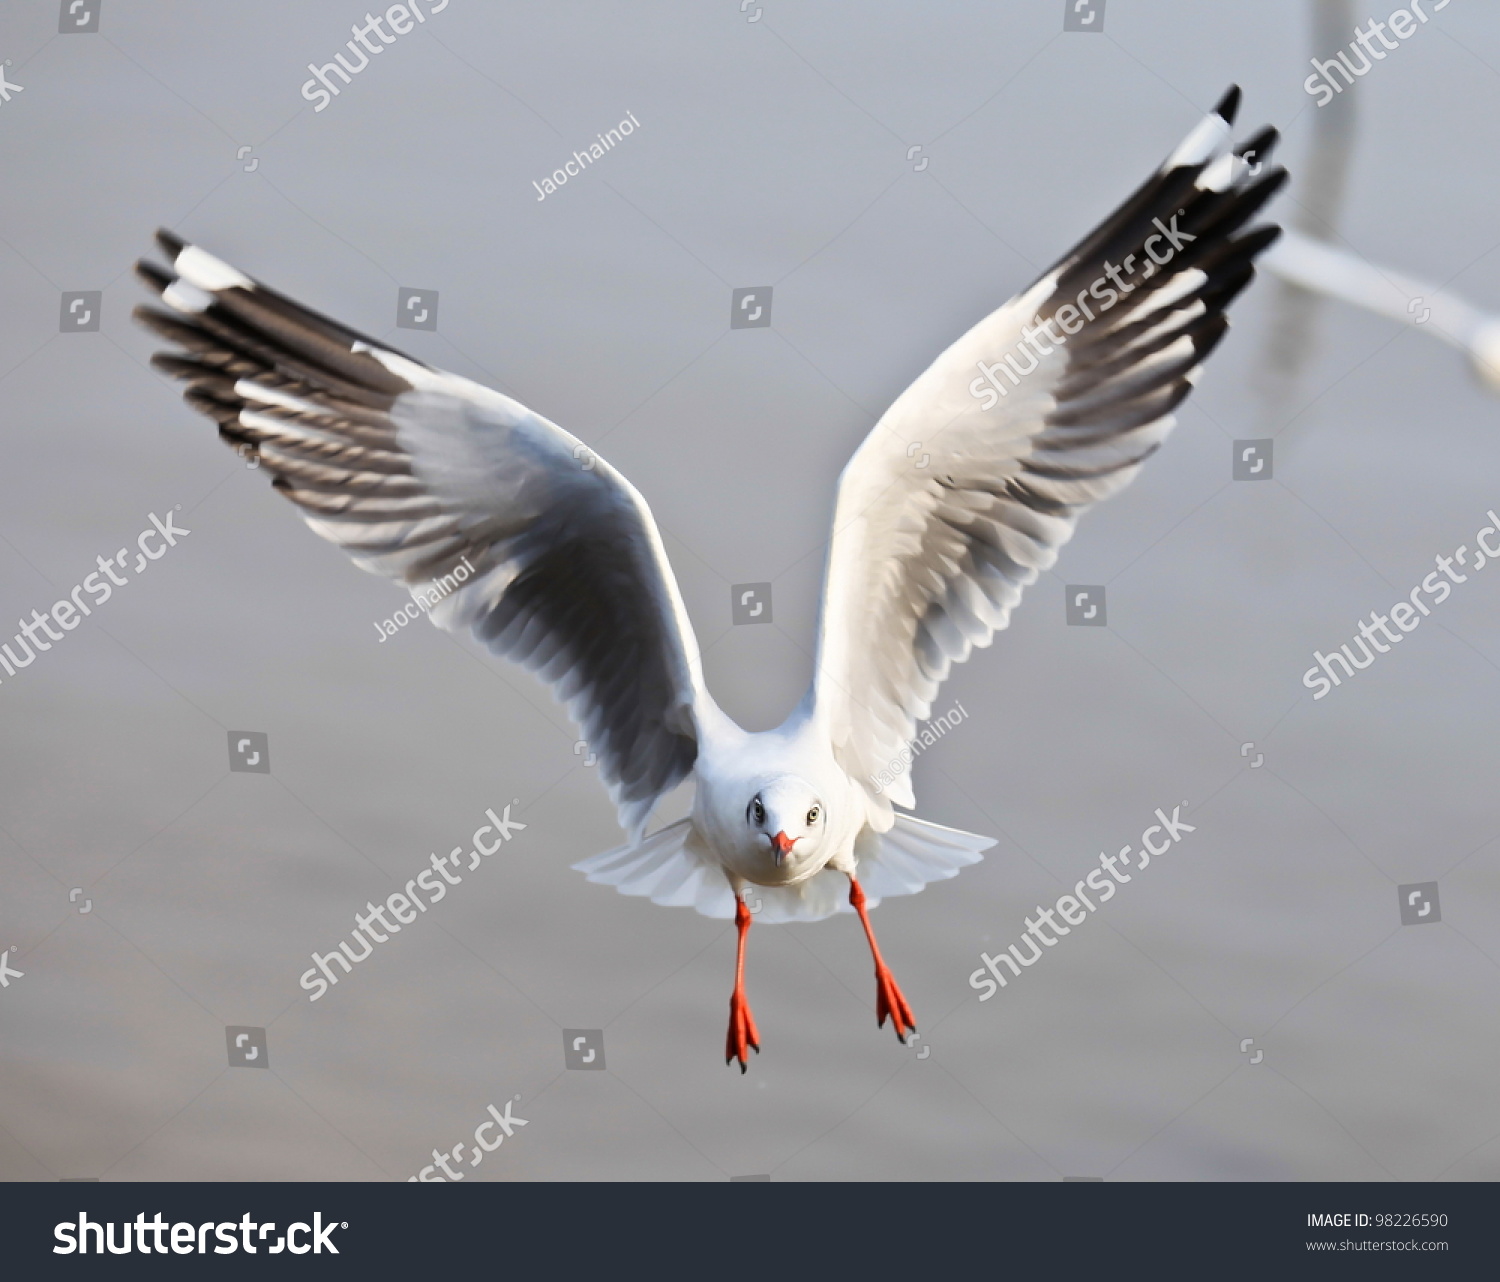 Flying Seagull Action Stock Photo 98226590 - Shutterstock